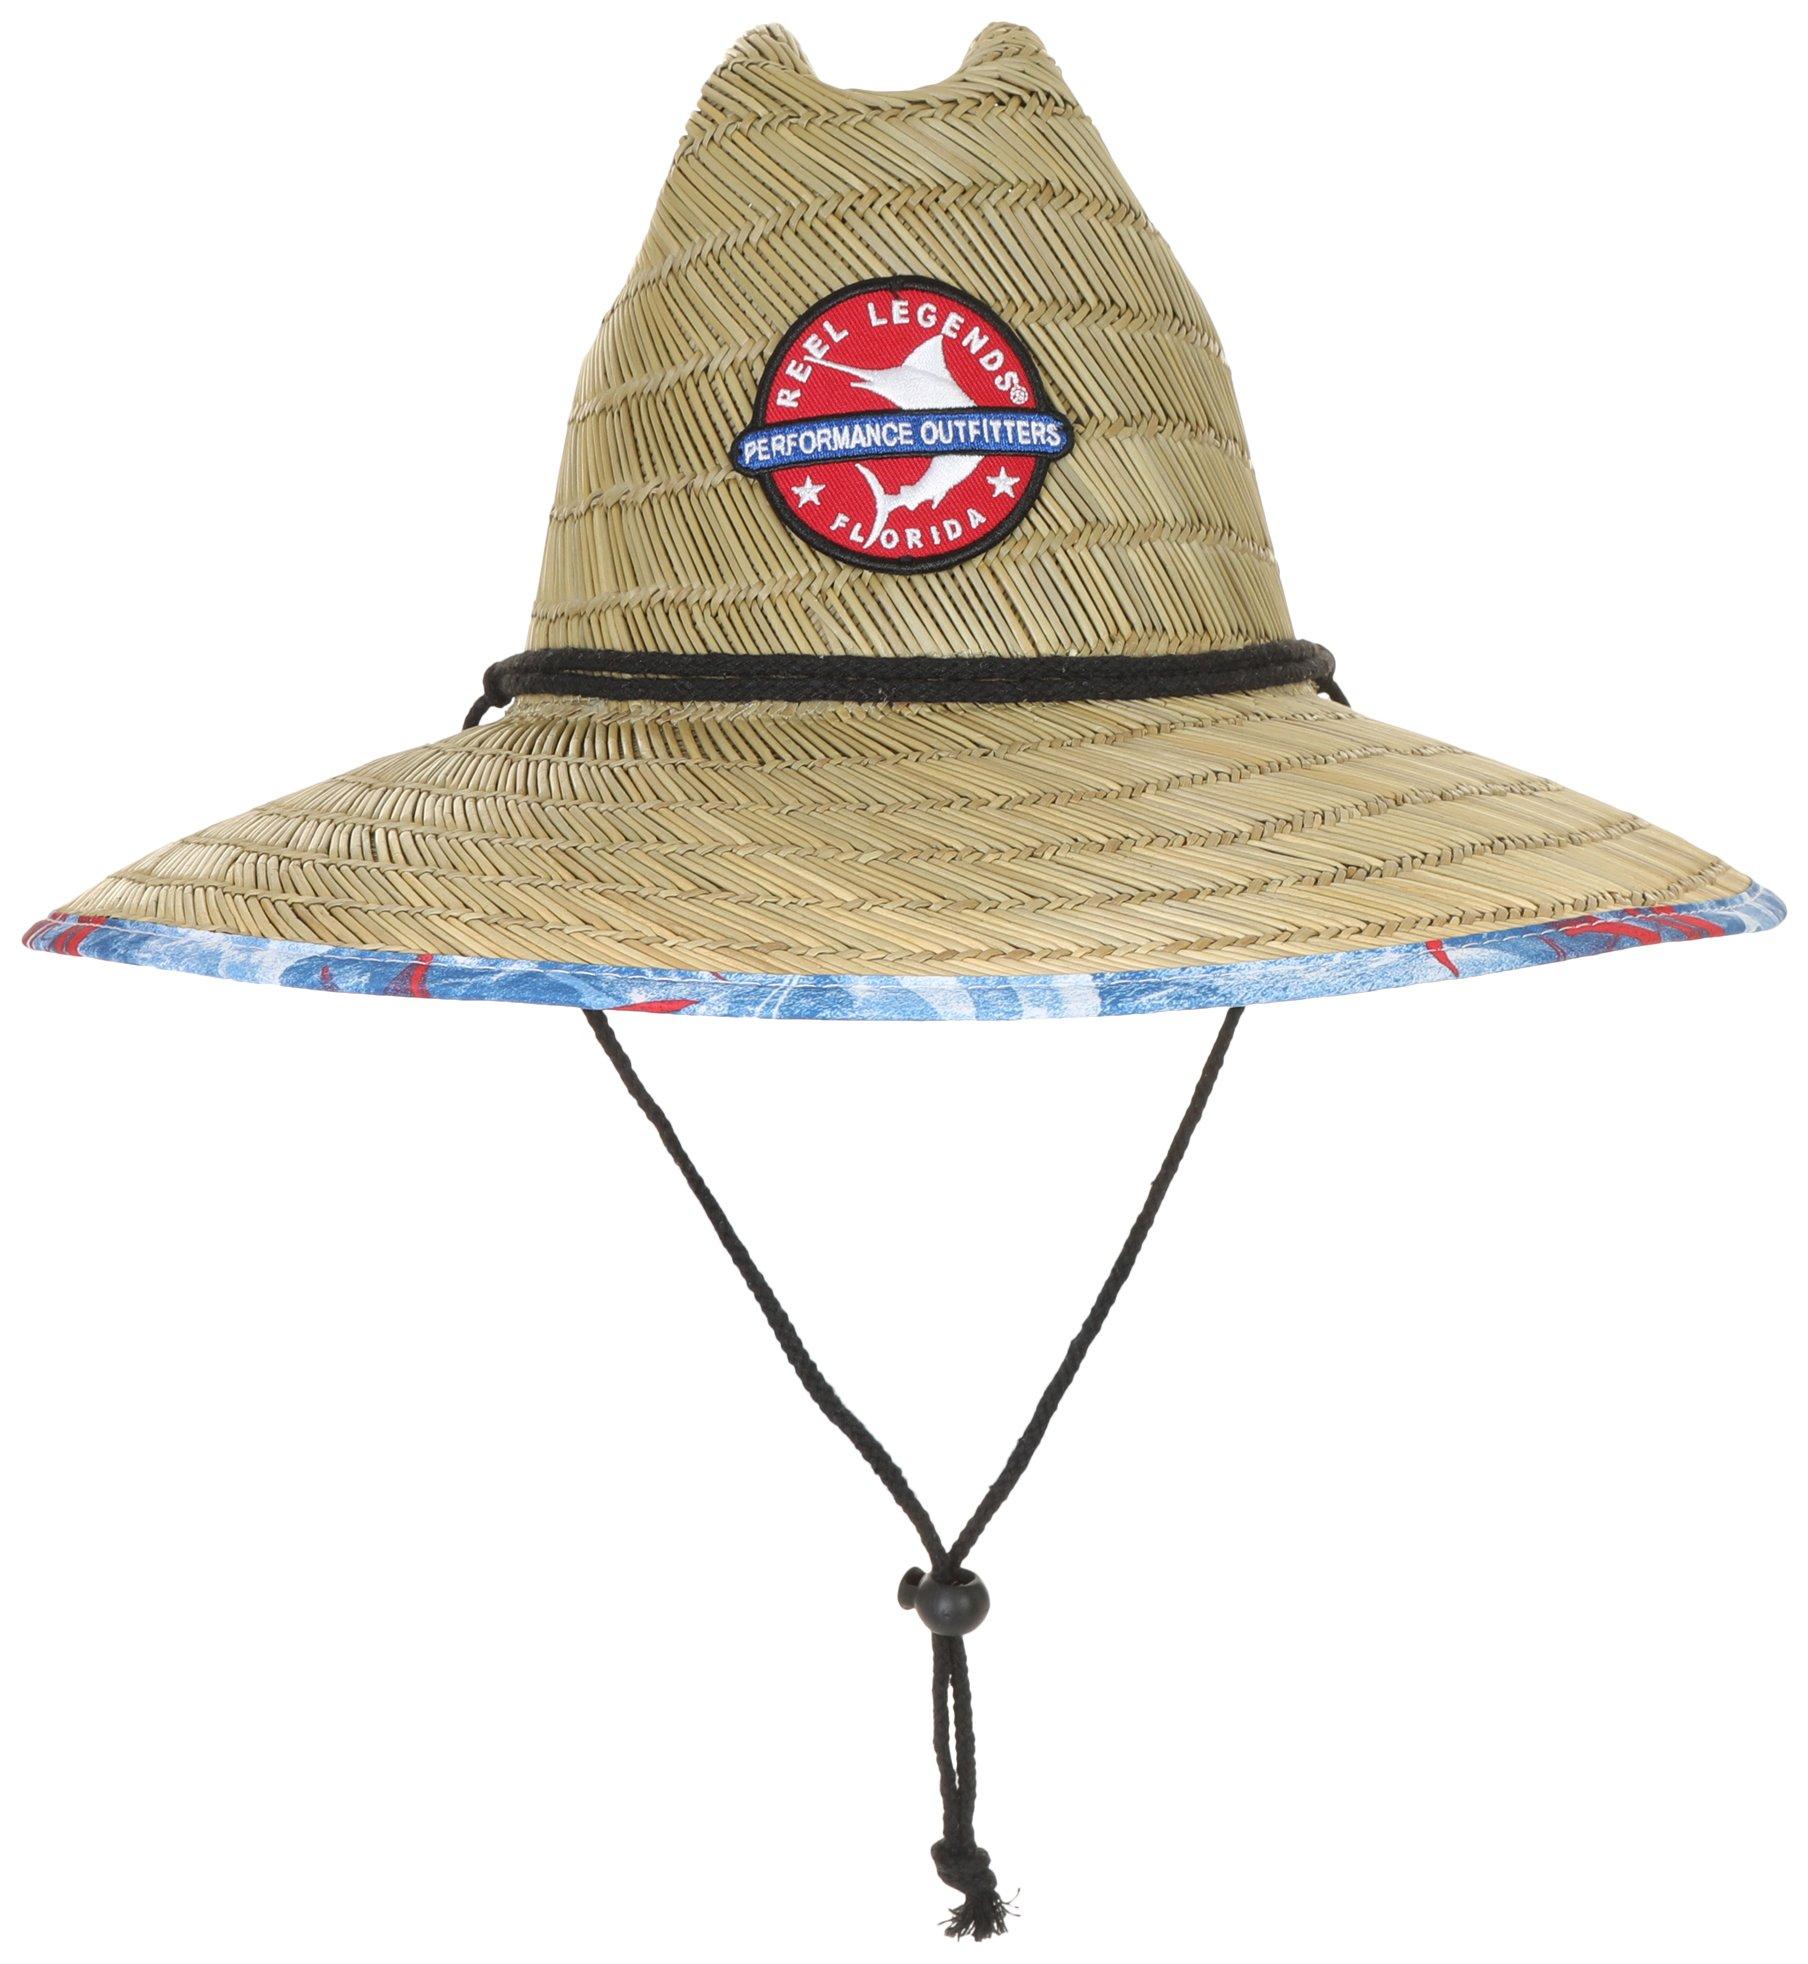 Flag Sun Hat, Men's Straw Hat with Fabric Pattern Print Lifeguard